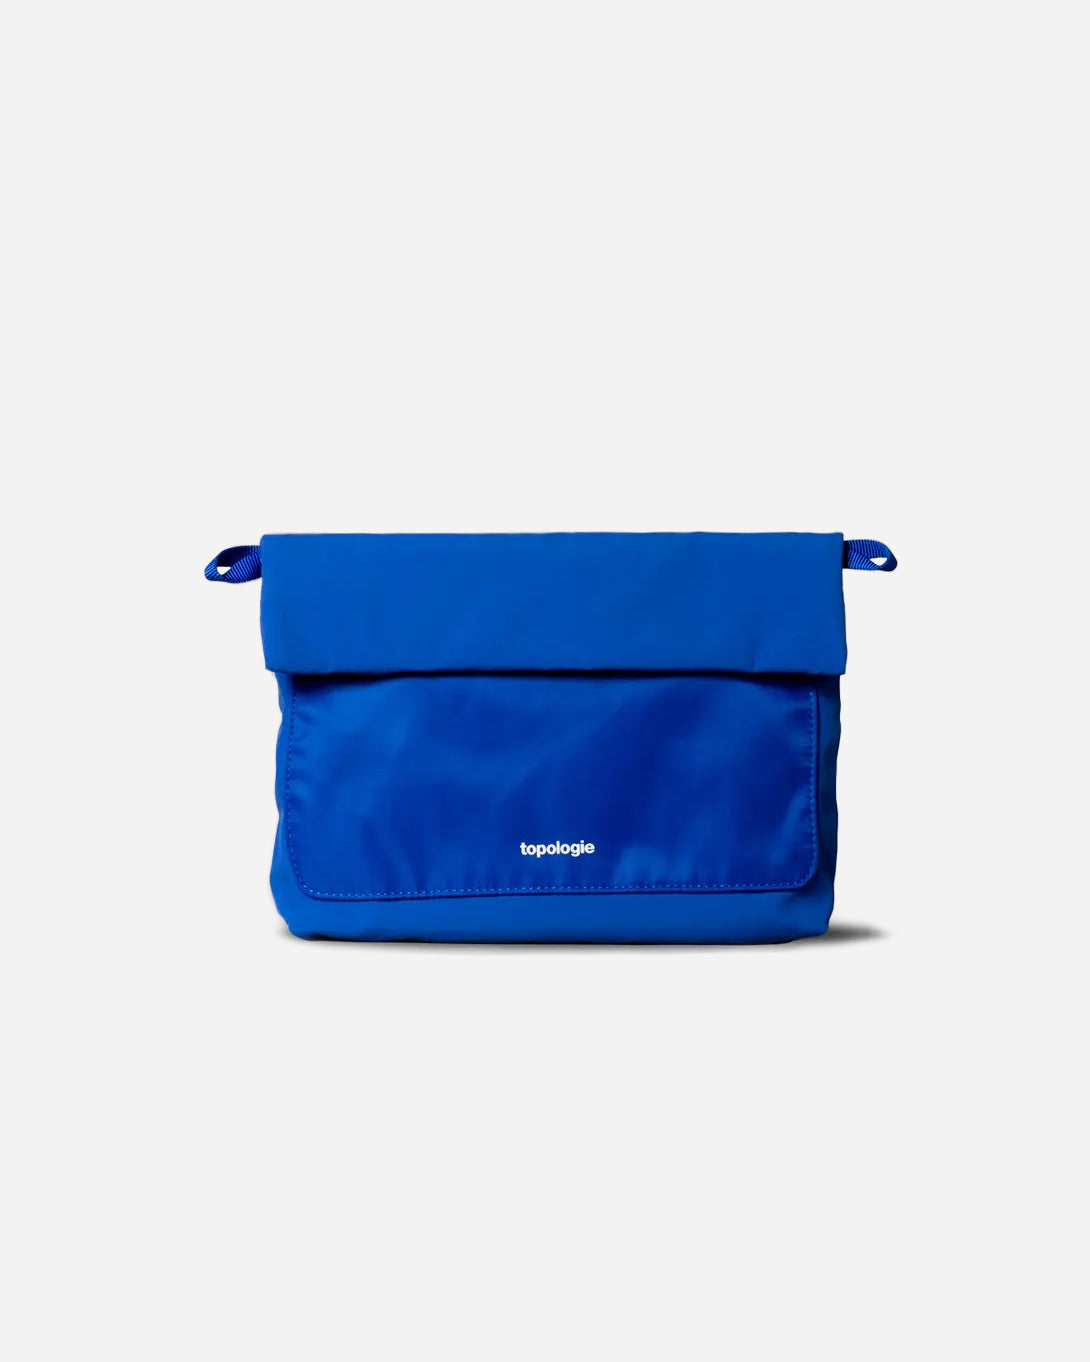 Future Blue Musette Topologie Bag